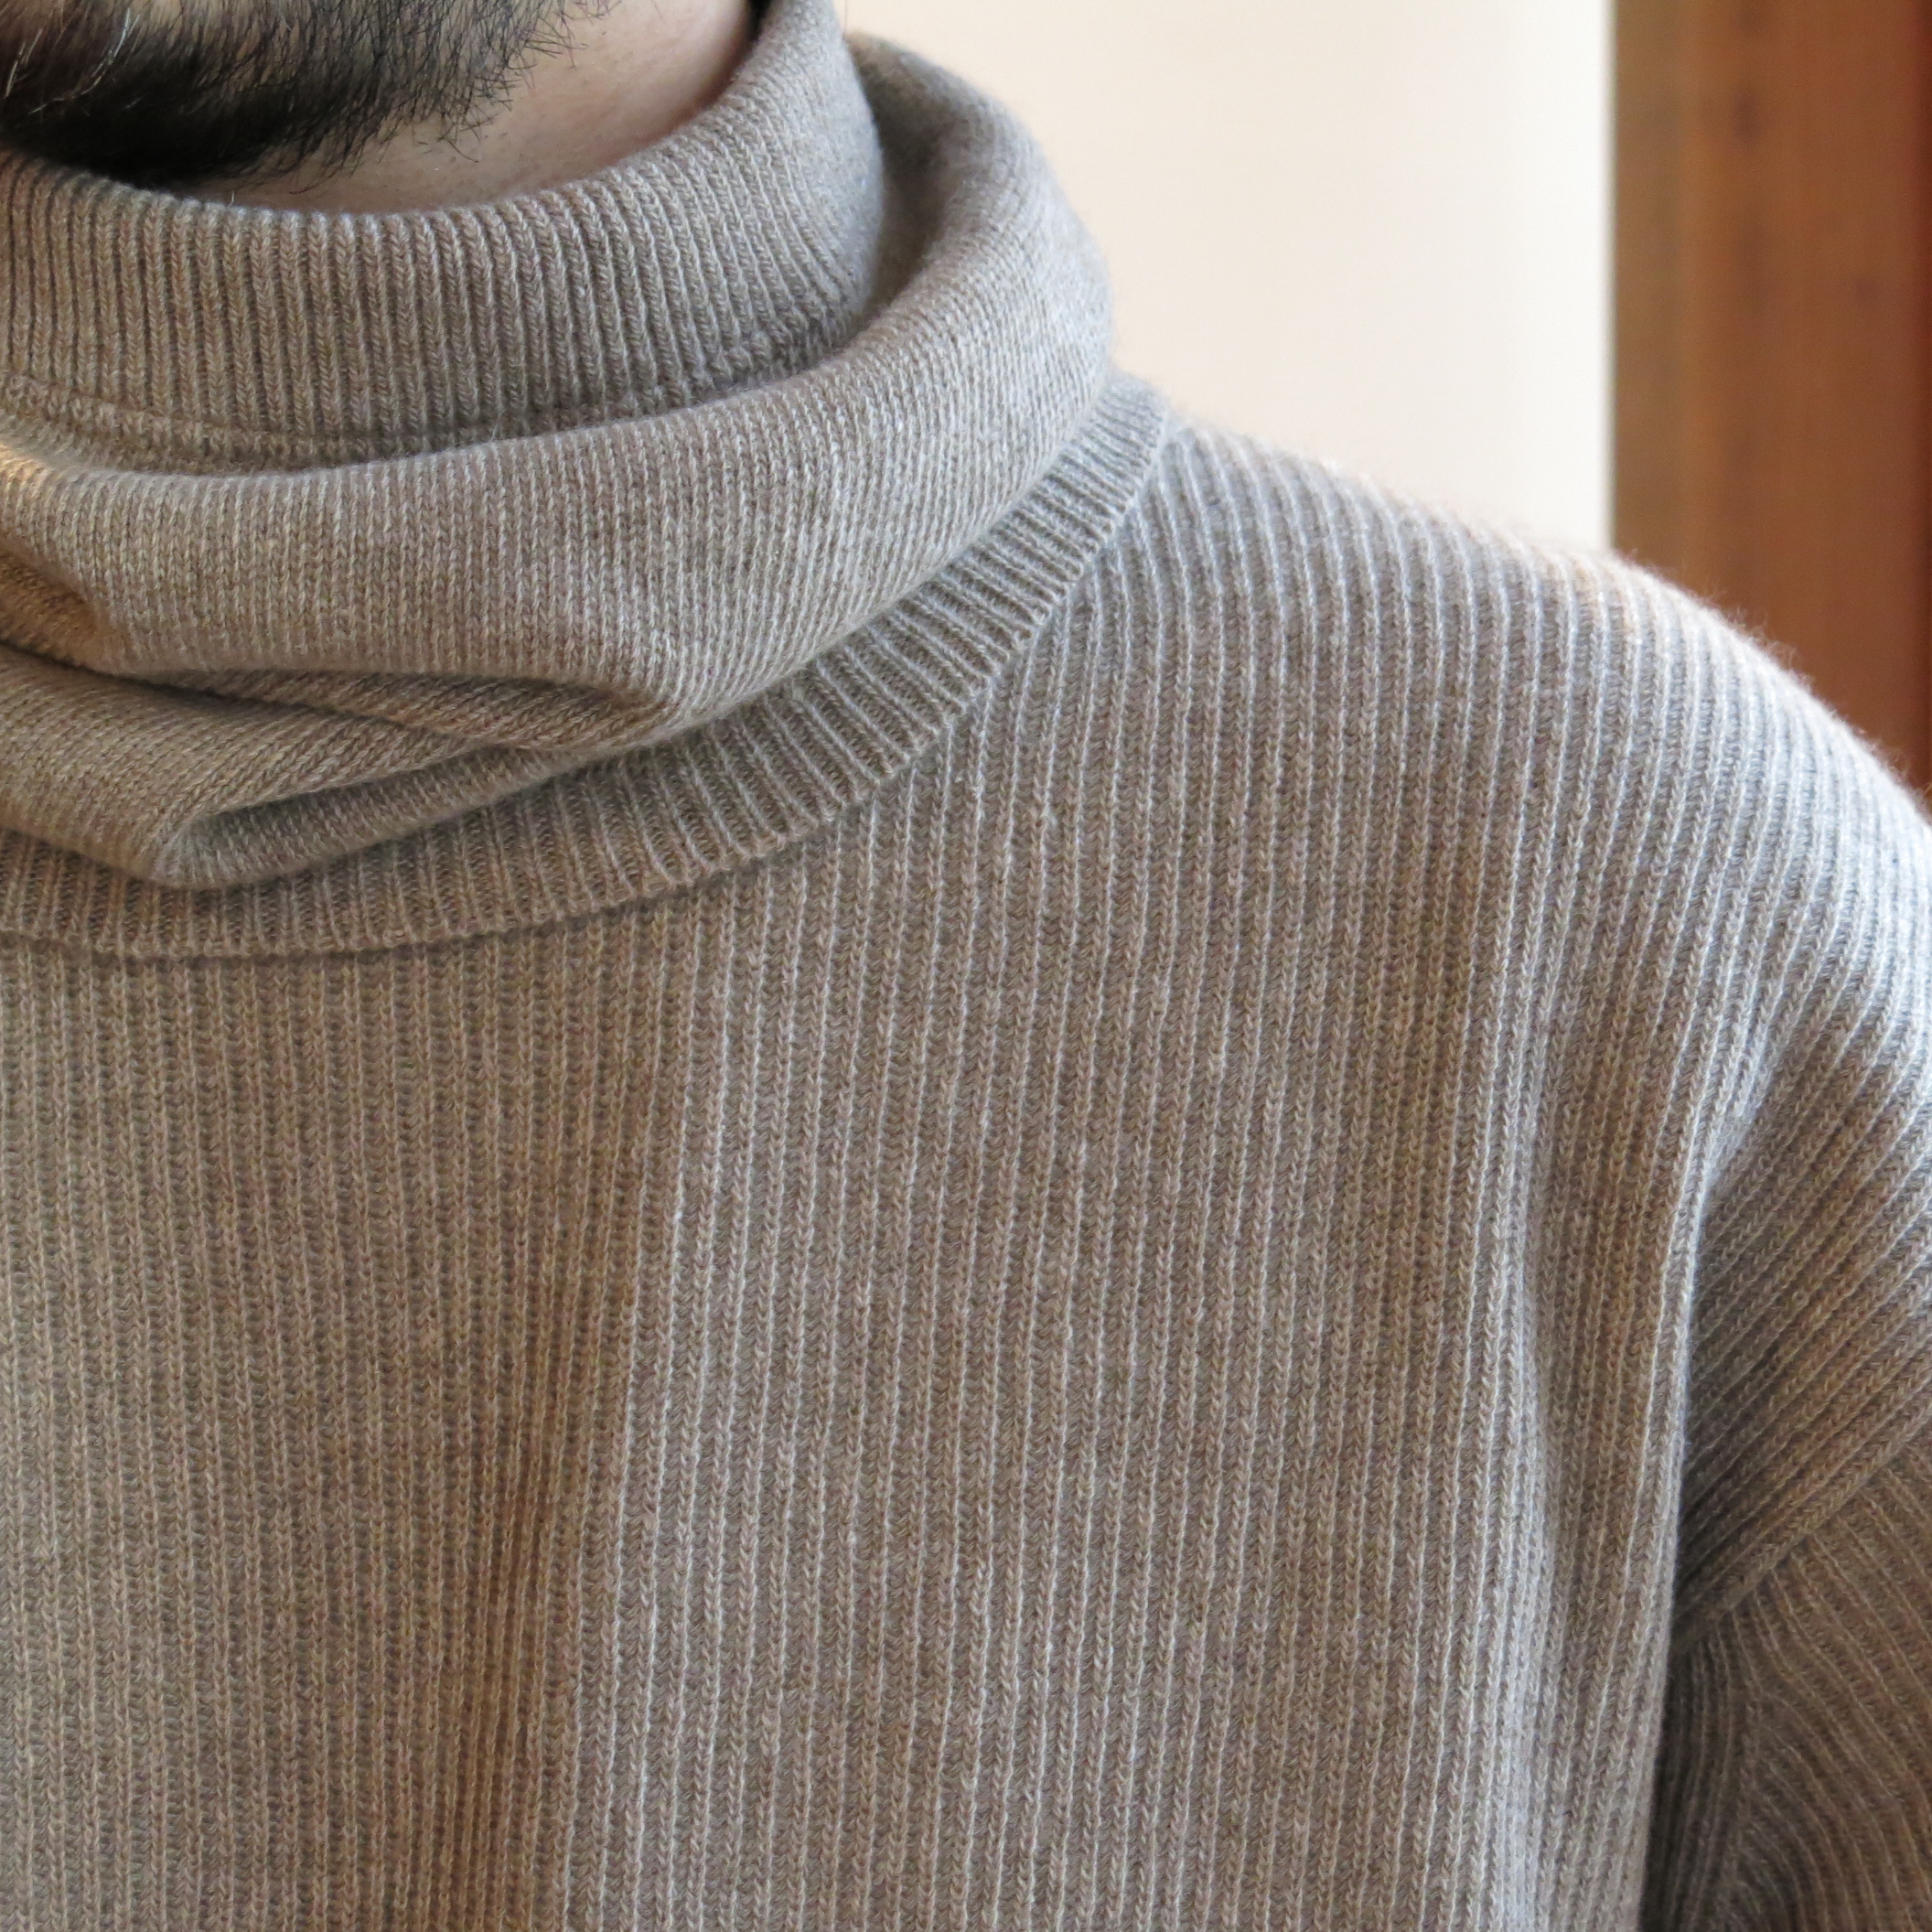 reverve / cashmere knit | TIBETAN MARKET